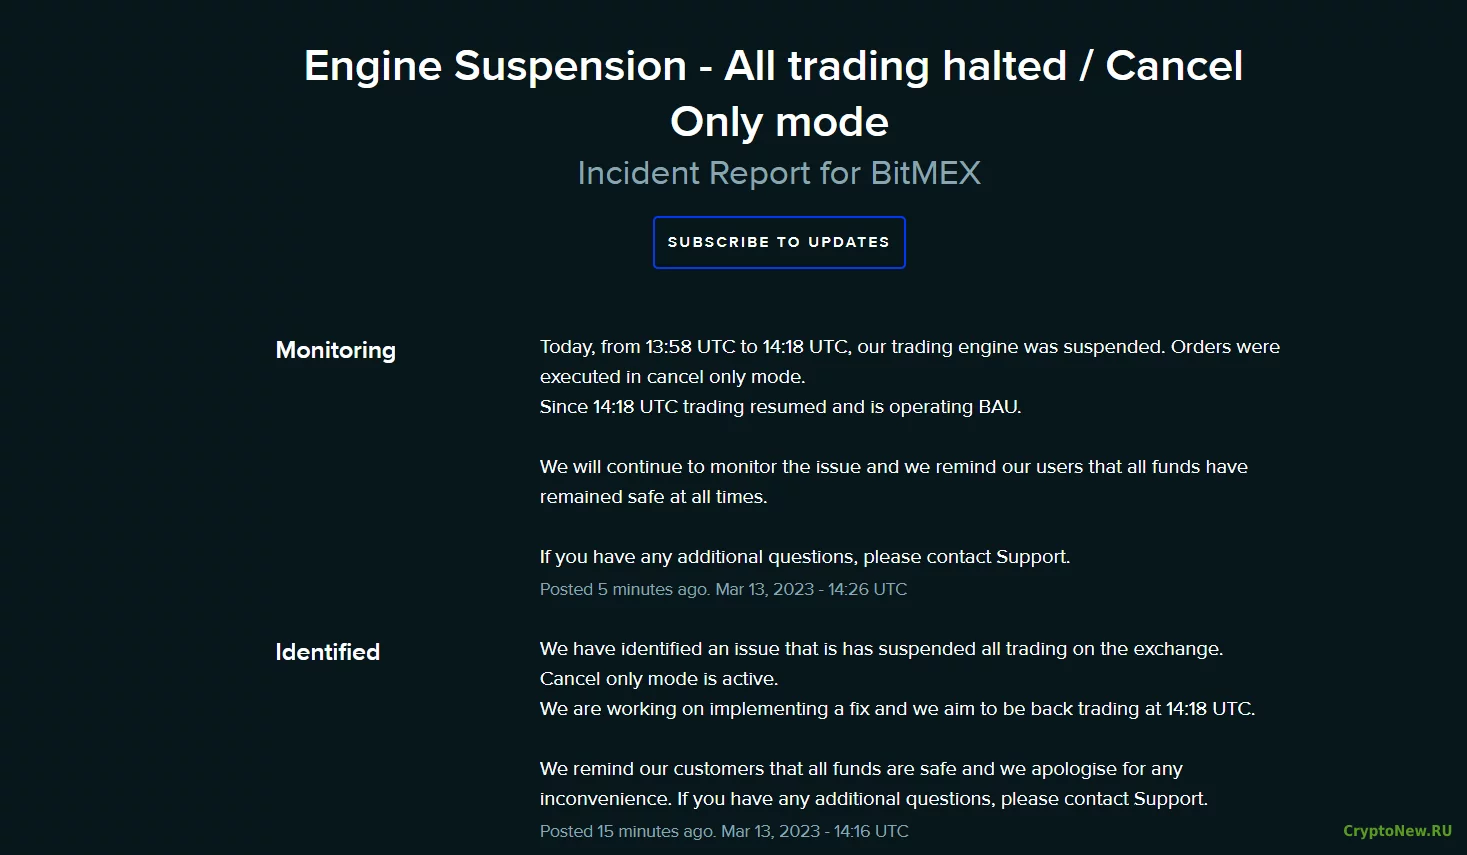 Ошибка в работе биржи BitMEX в тот момент когда биткоин вырос до 23 000$/